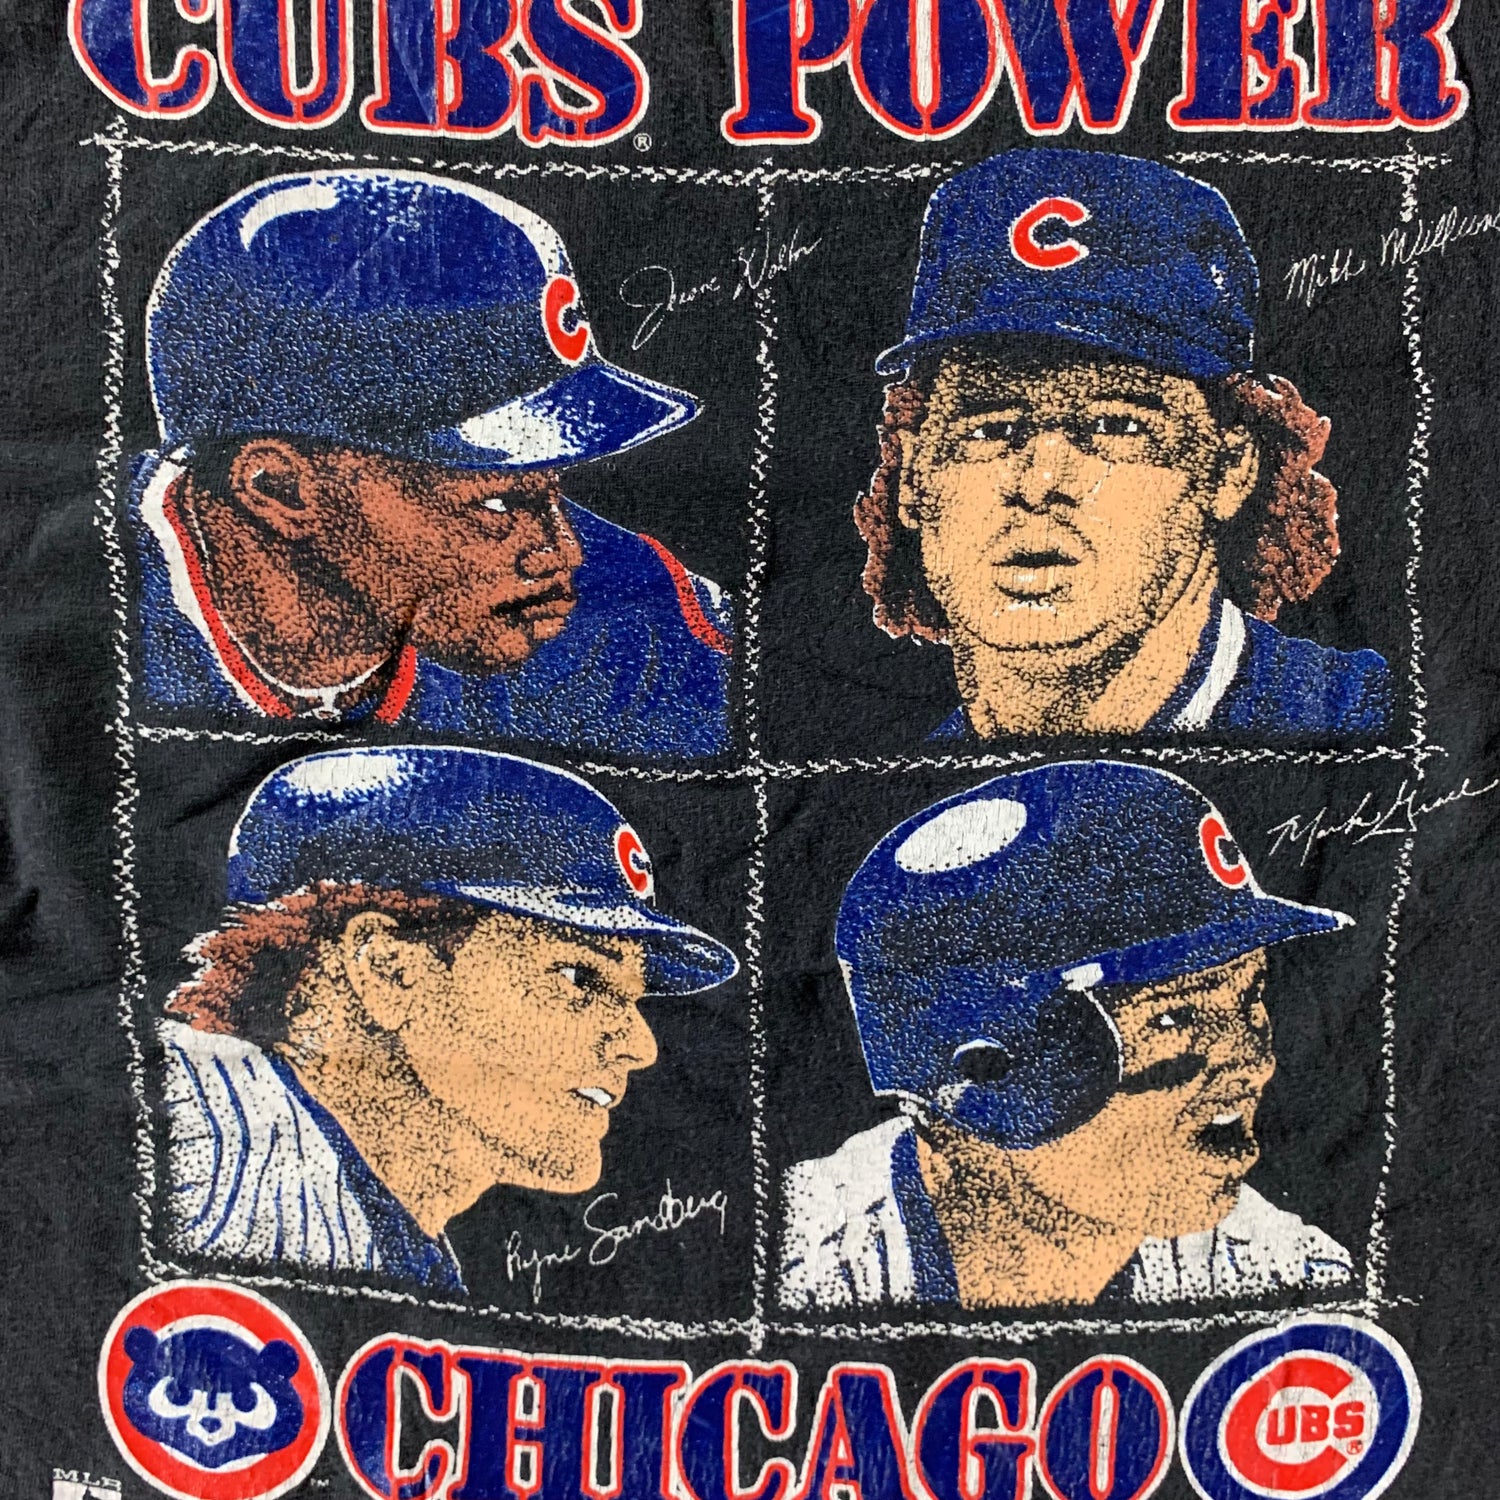 Vintage Cubs 1990s T Shirt 1993 Cubs T Shirt Official MLB 